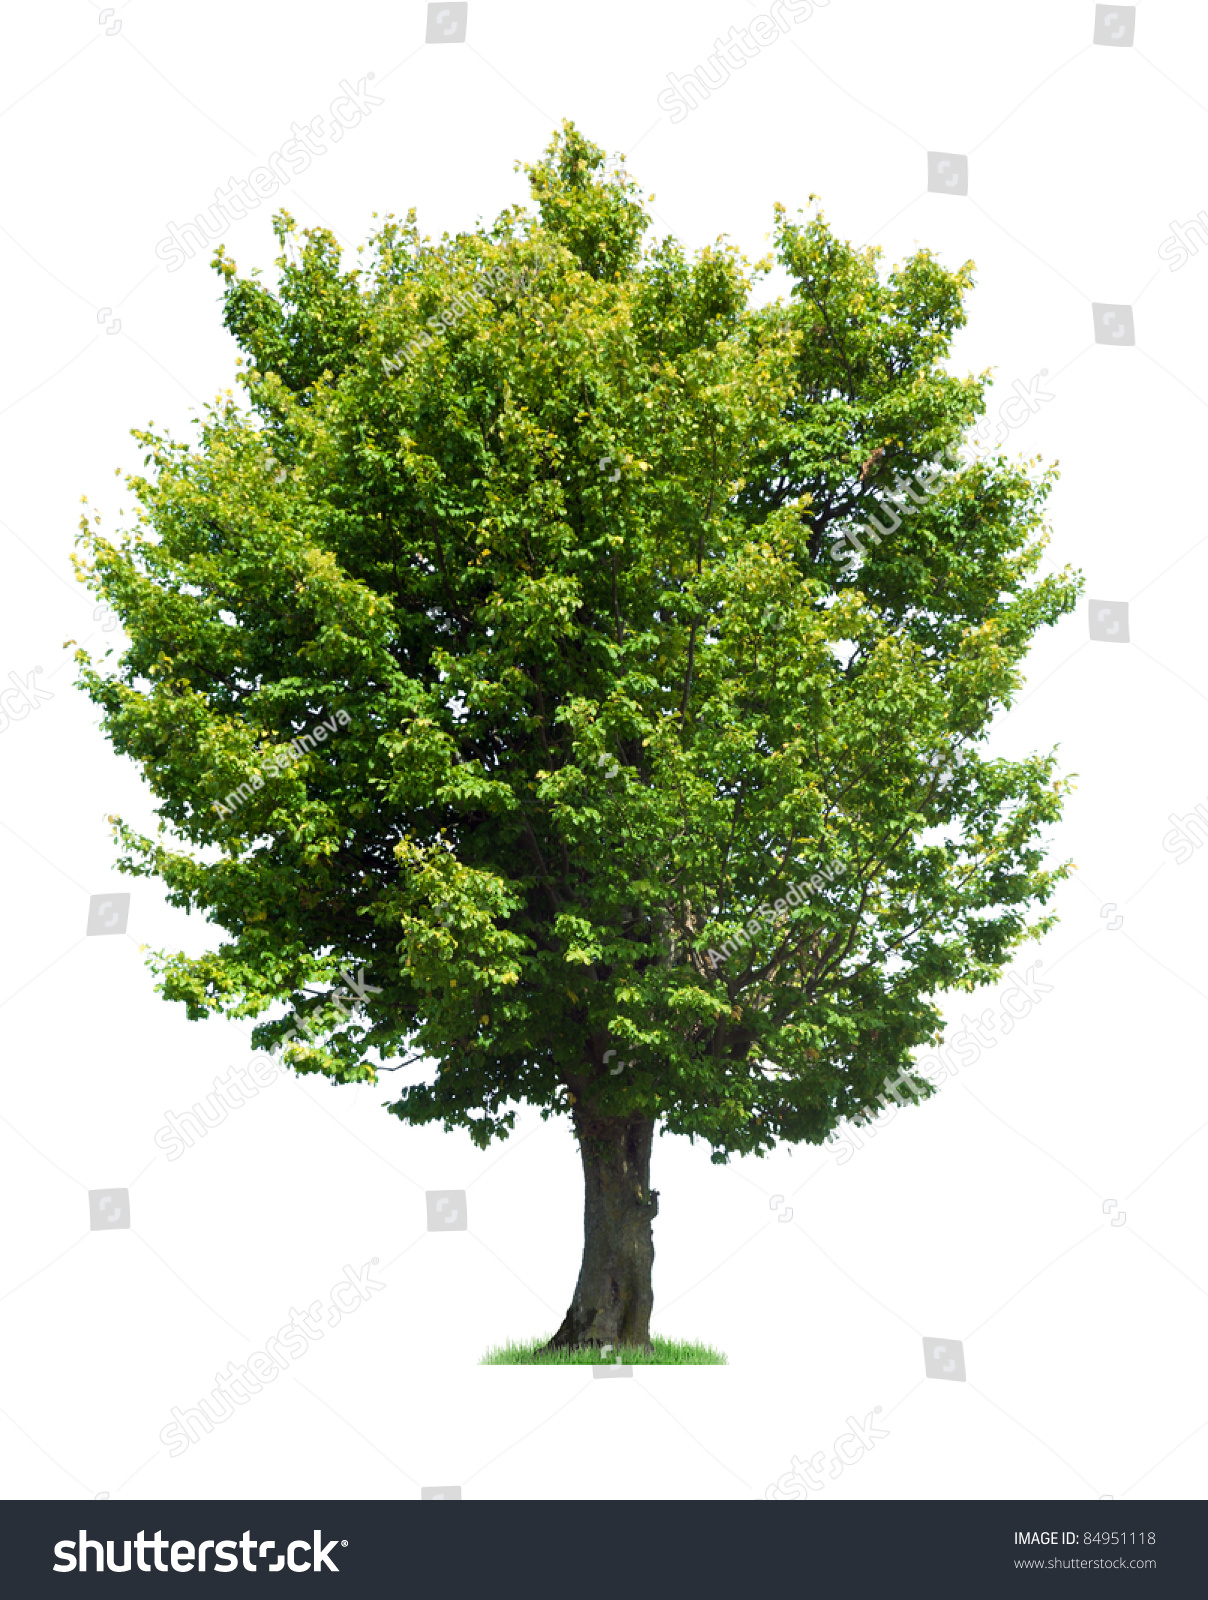 Shutter single hall tree